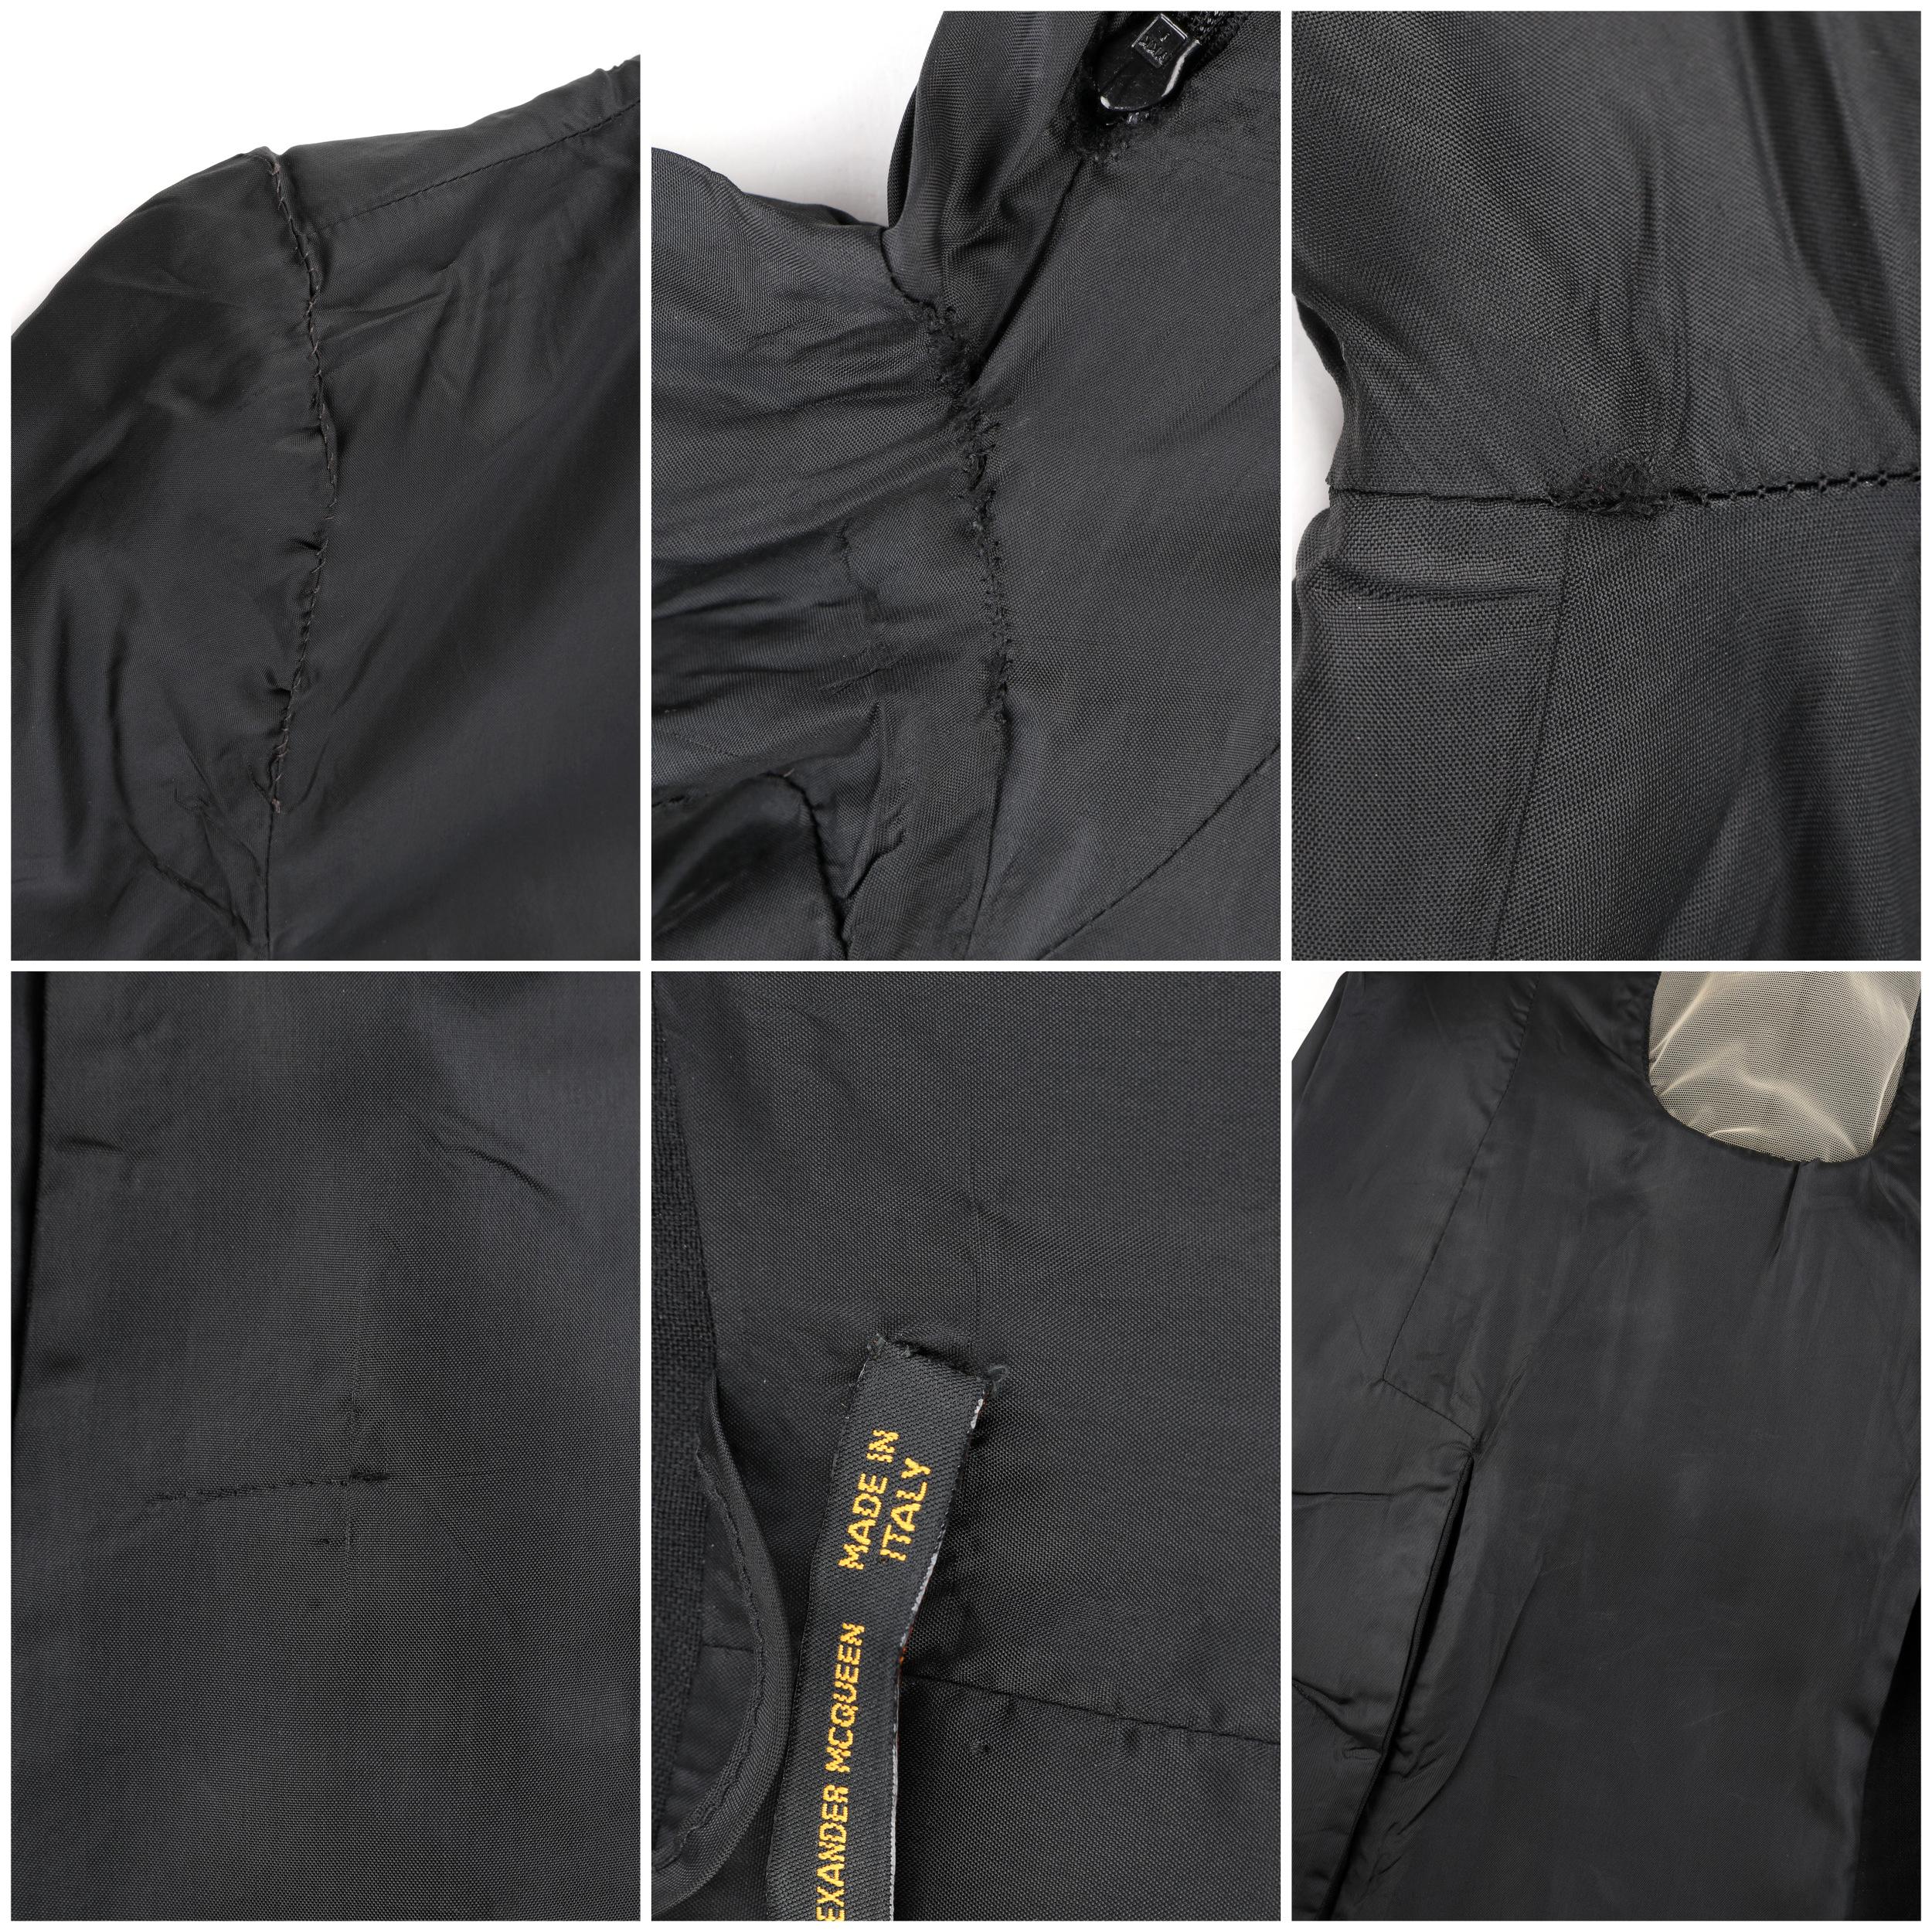 ALEXANDER McQUEEN S/S 1998 “Golden Shower” Plunge Neck Micro Mini Tuxedo Dress For Sale 4